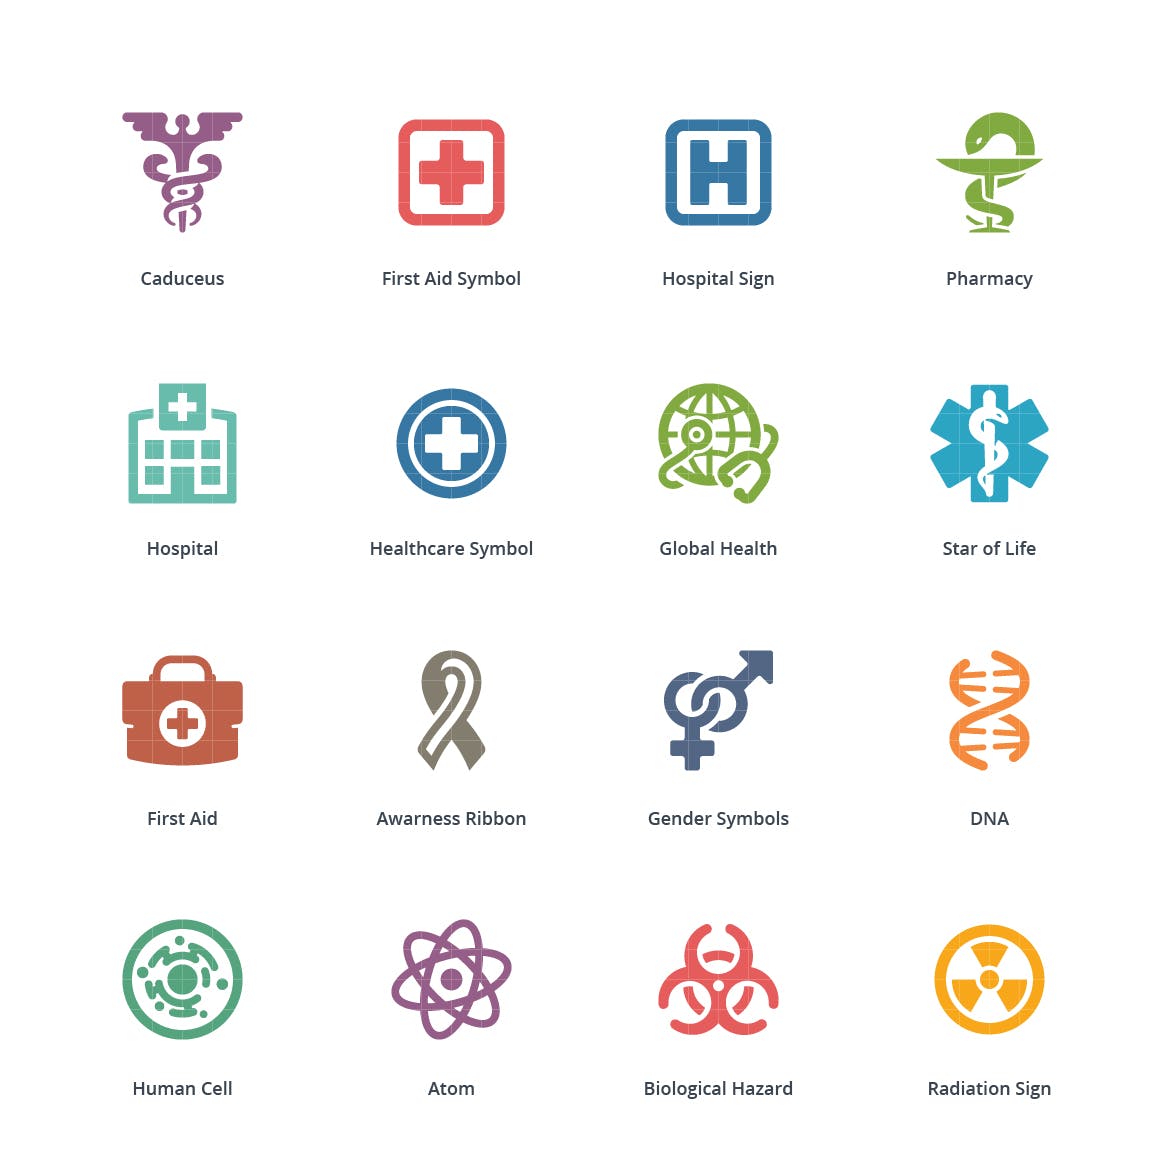 Colored系列-医疗保健主题矢量16图库精选图标集v1 Medical & Health Care Icons Set 1 – Colored Series插图(1)